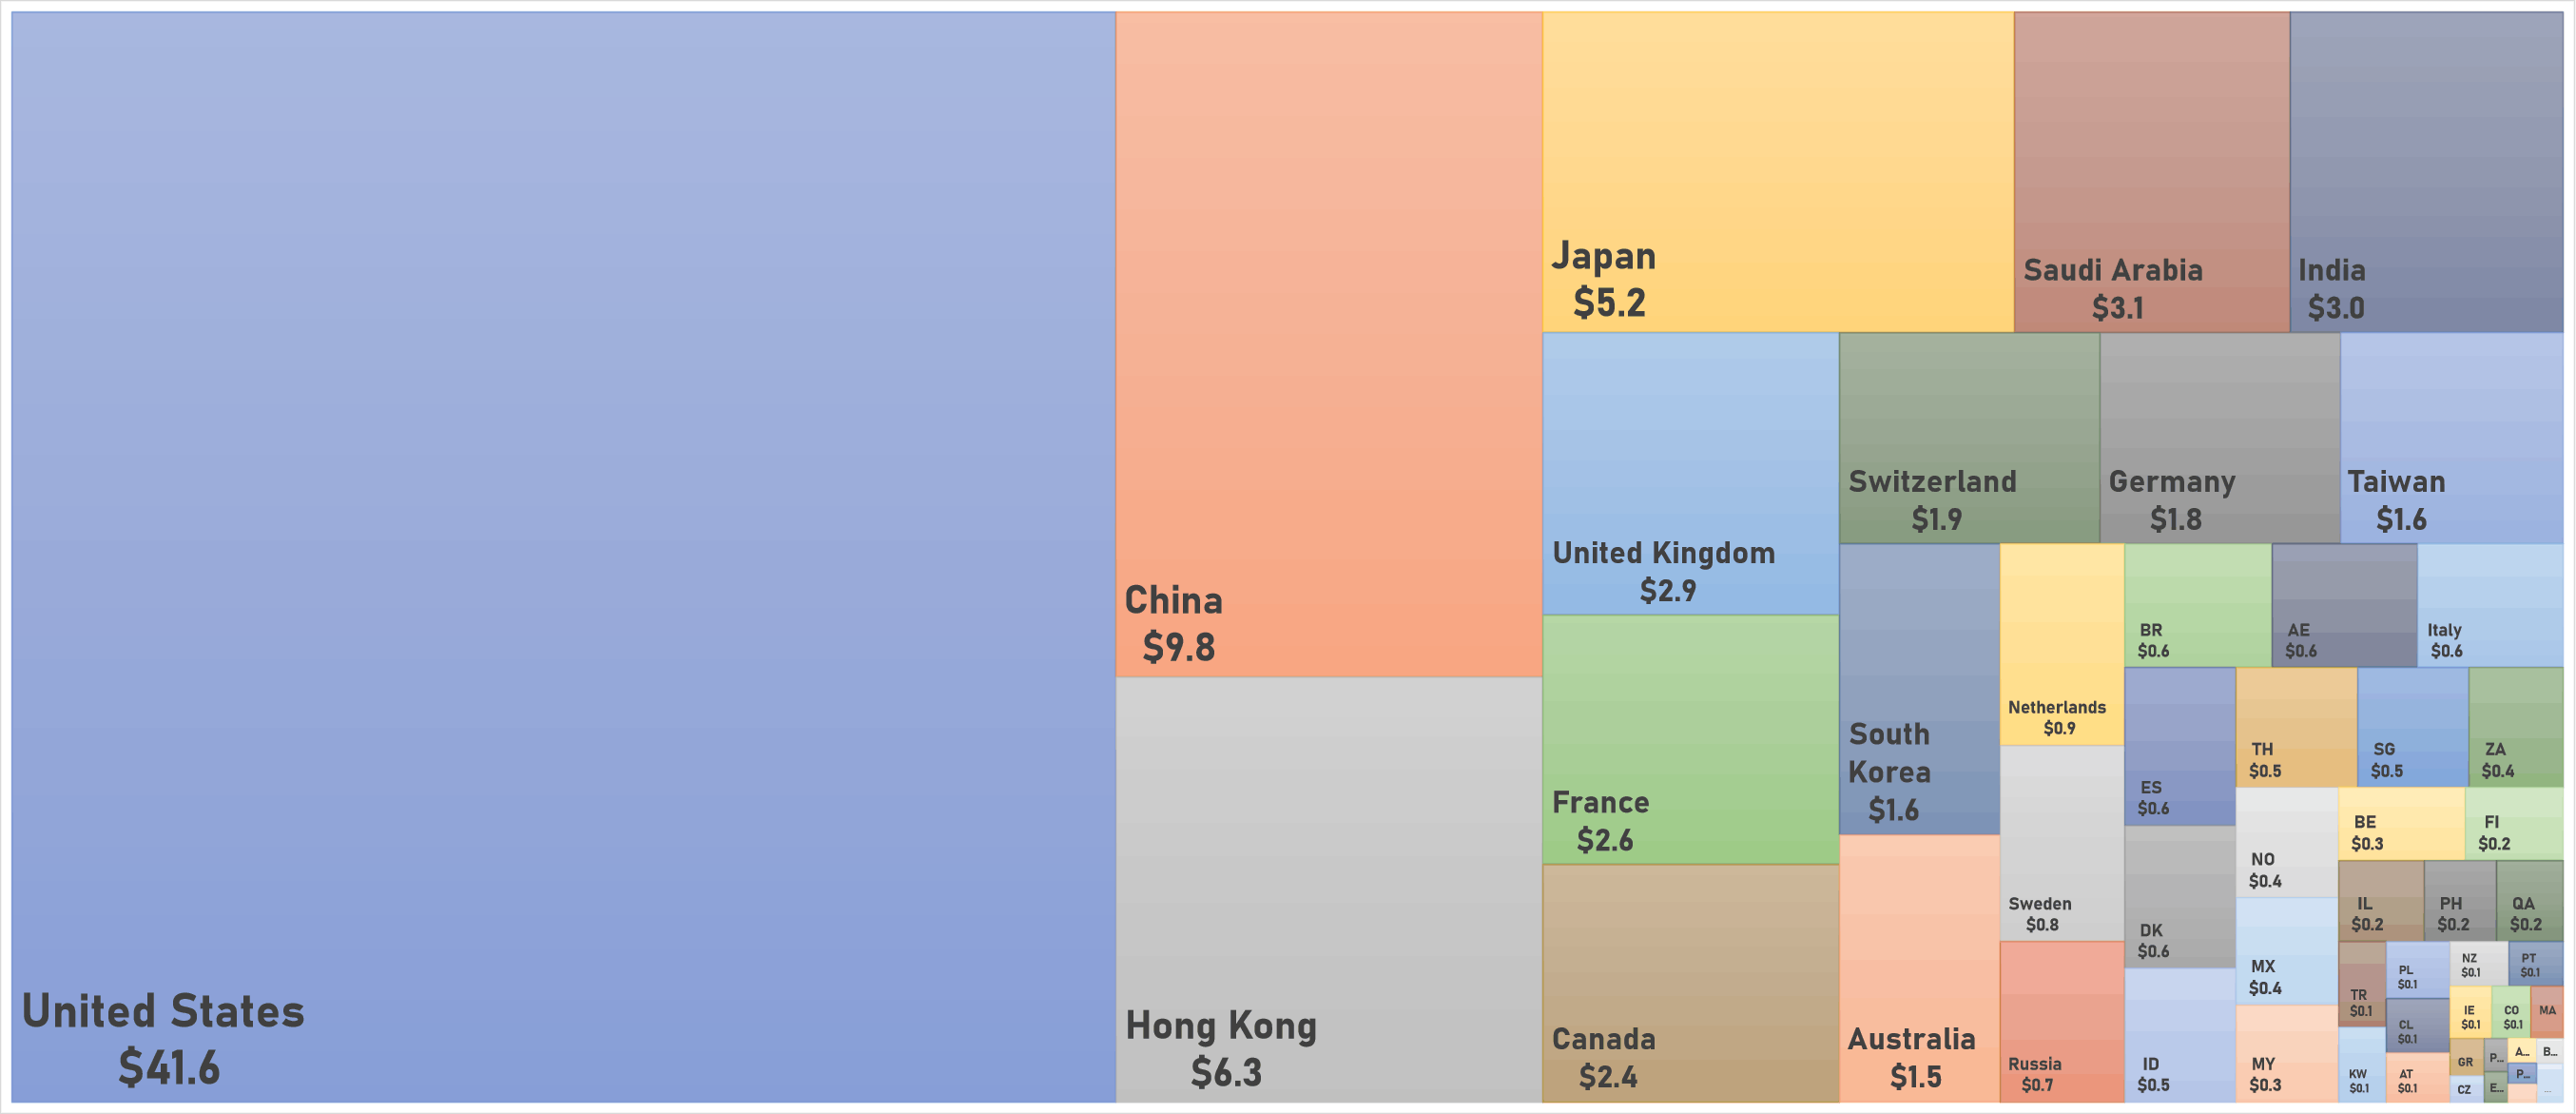 World Market Cap In US$ trillion | Sources: phipost.com, FactSet data